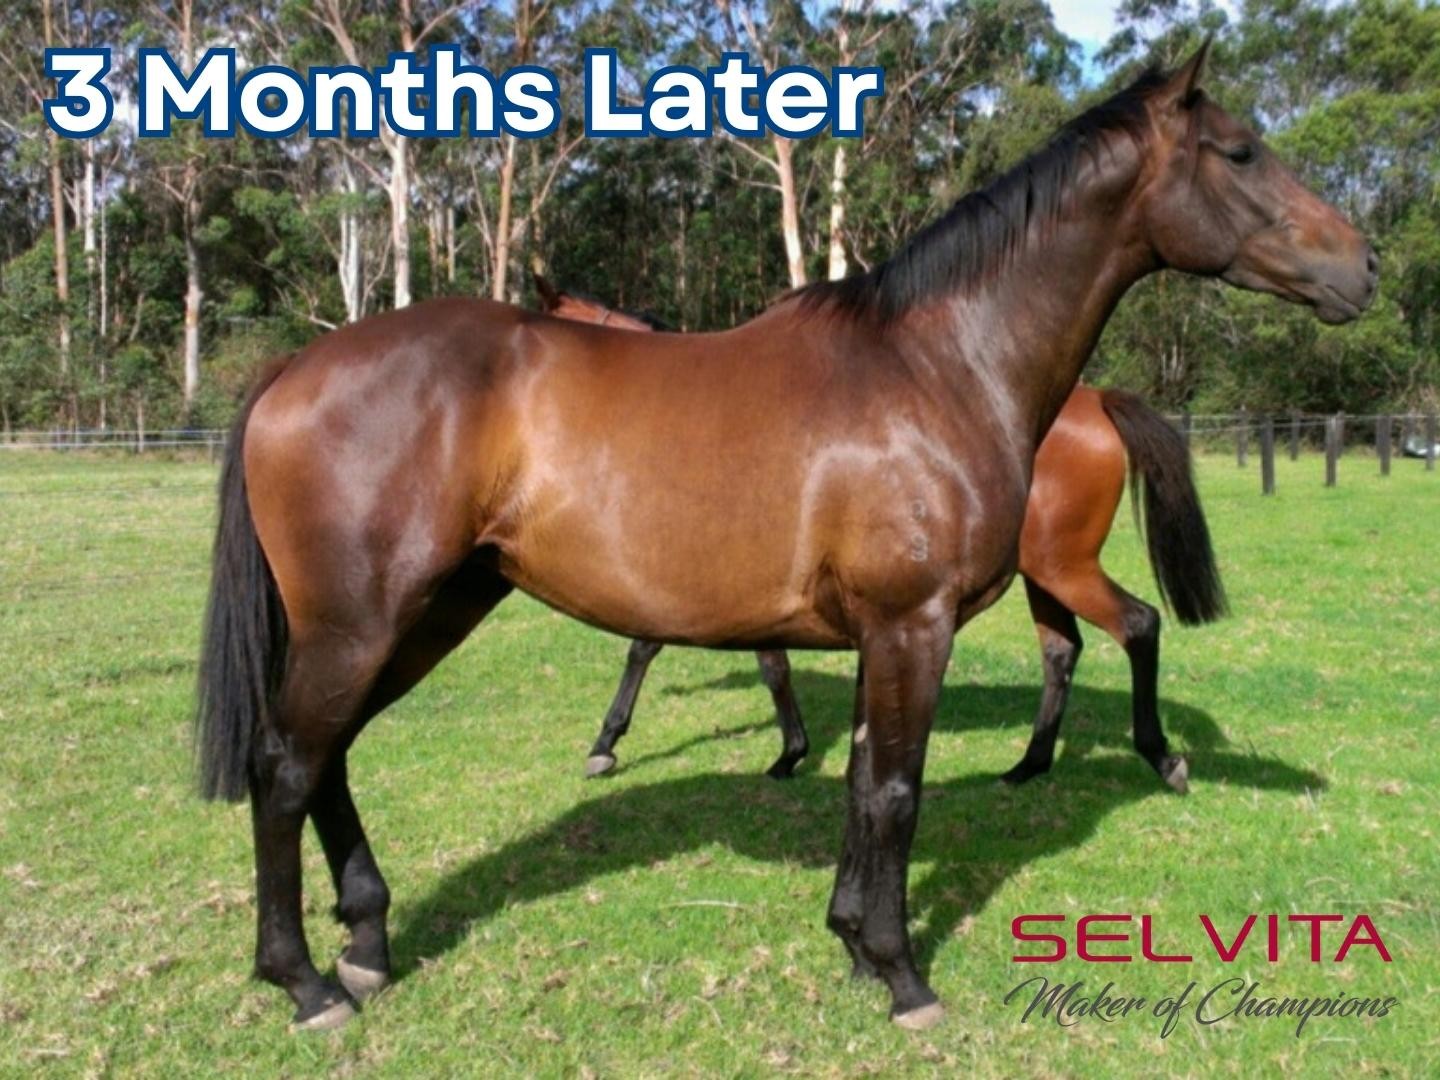 Selvita Equine 3 months later